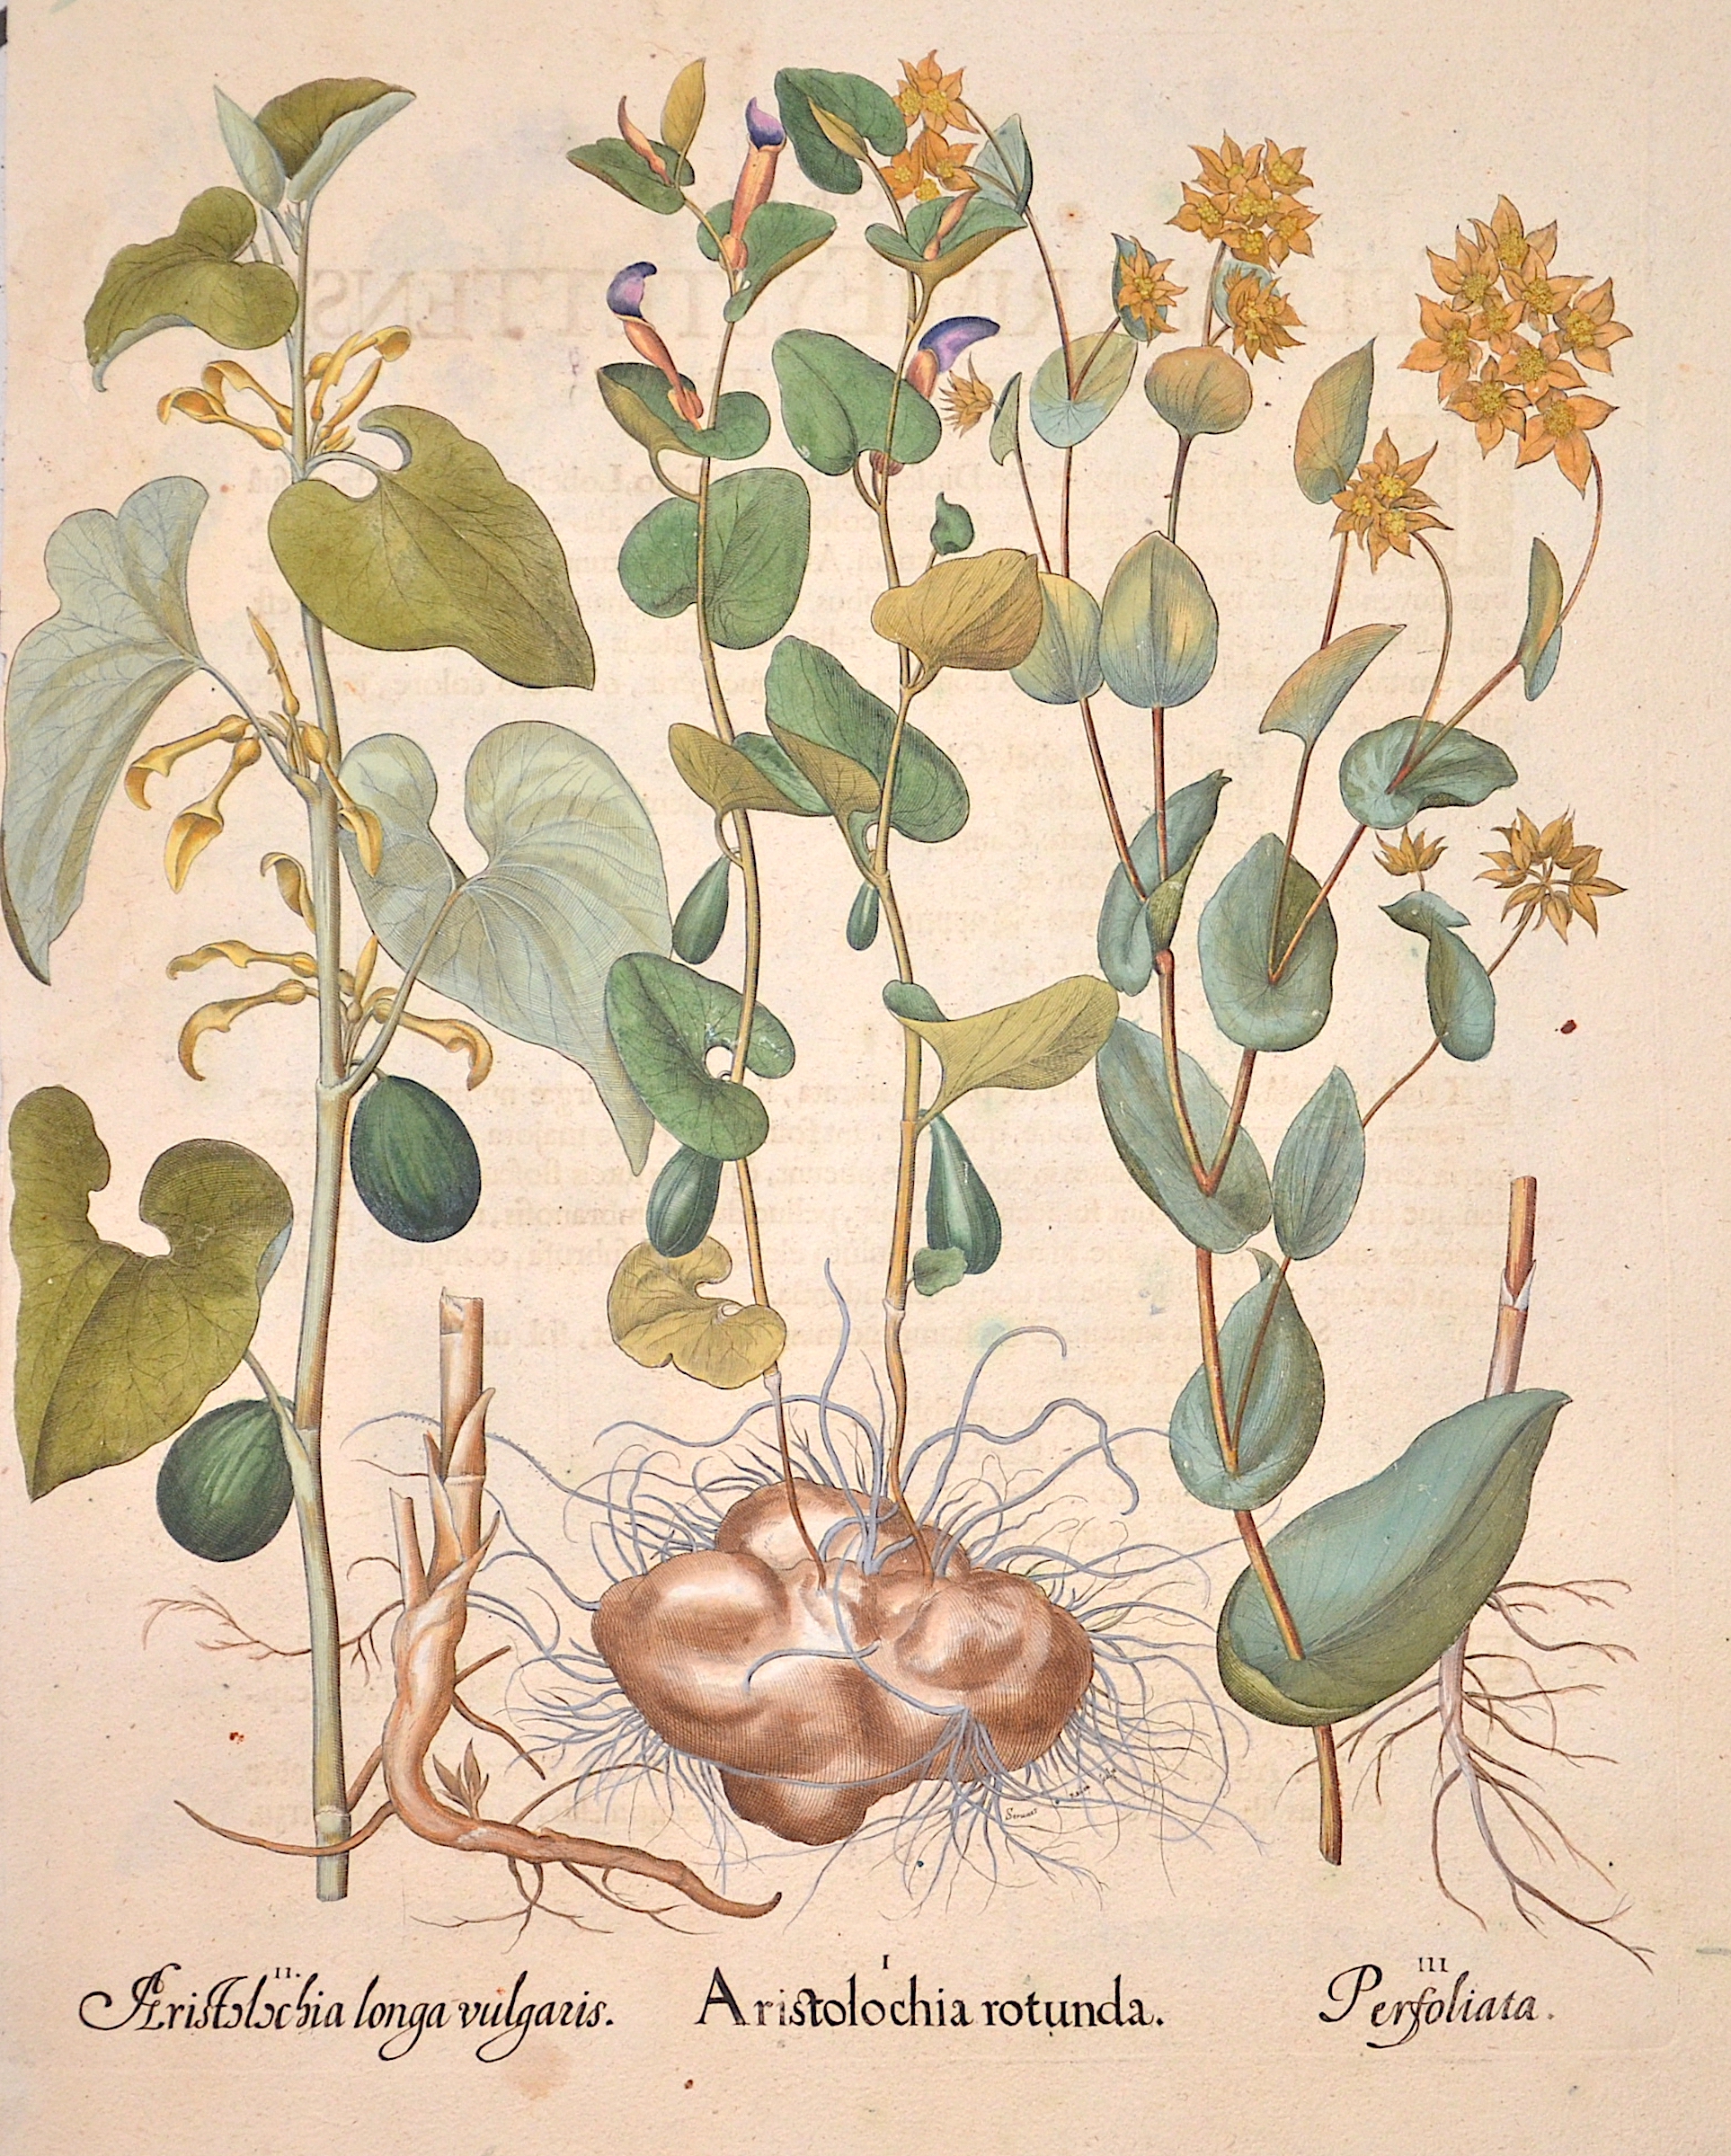 Besler  Aristolochia rotunder/ Aristolochia longa vulgaris/ Perfoliata